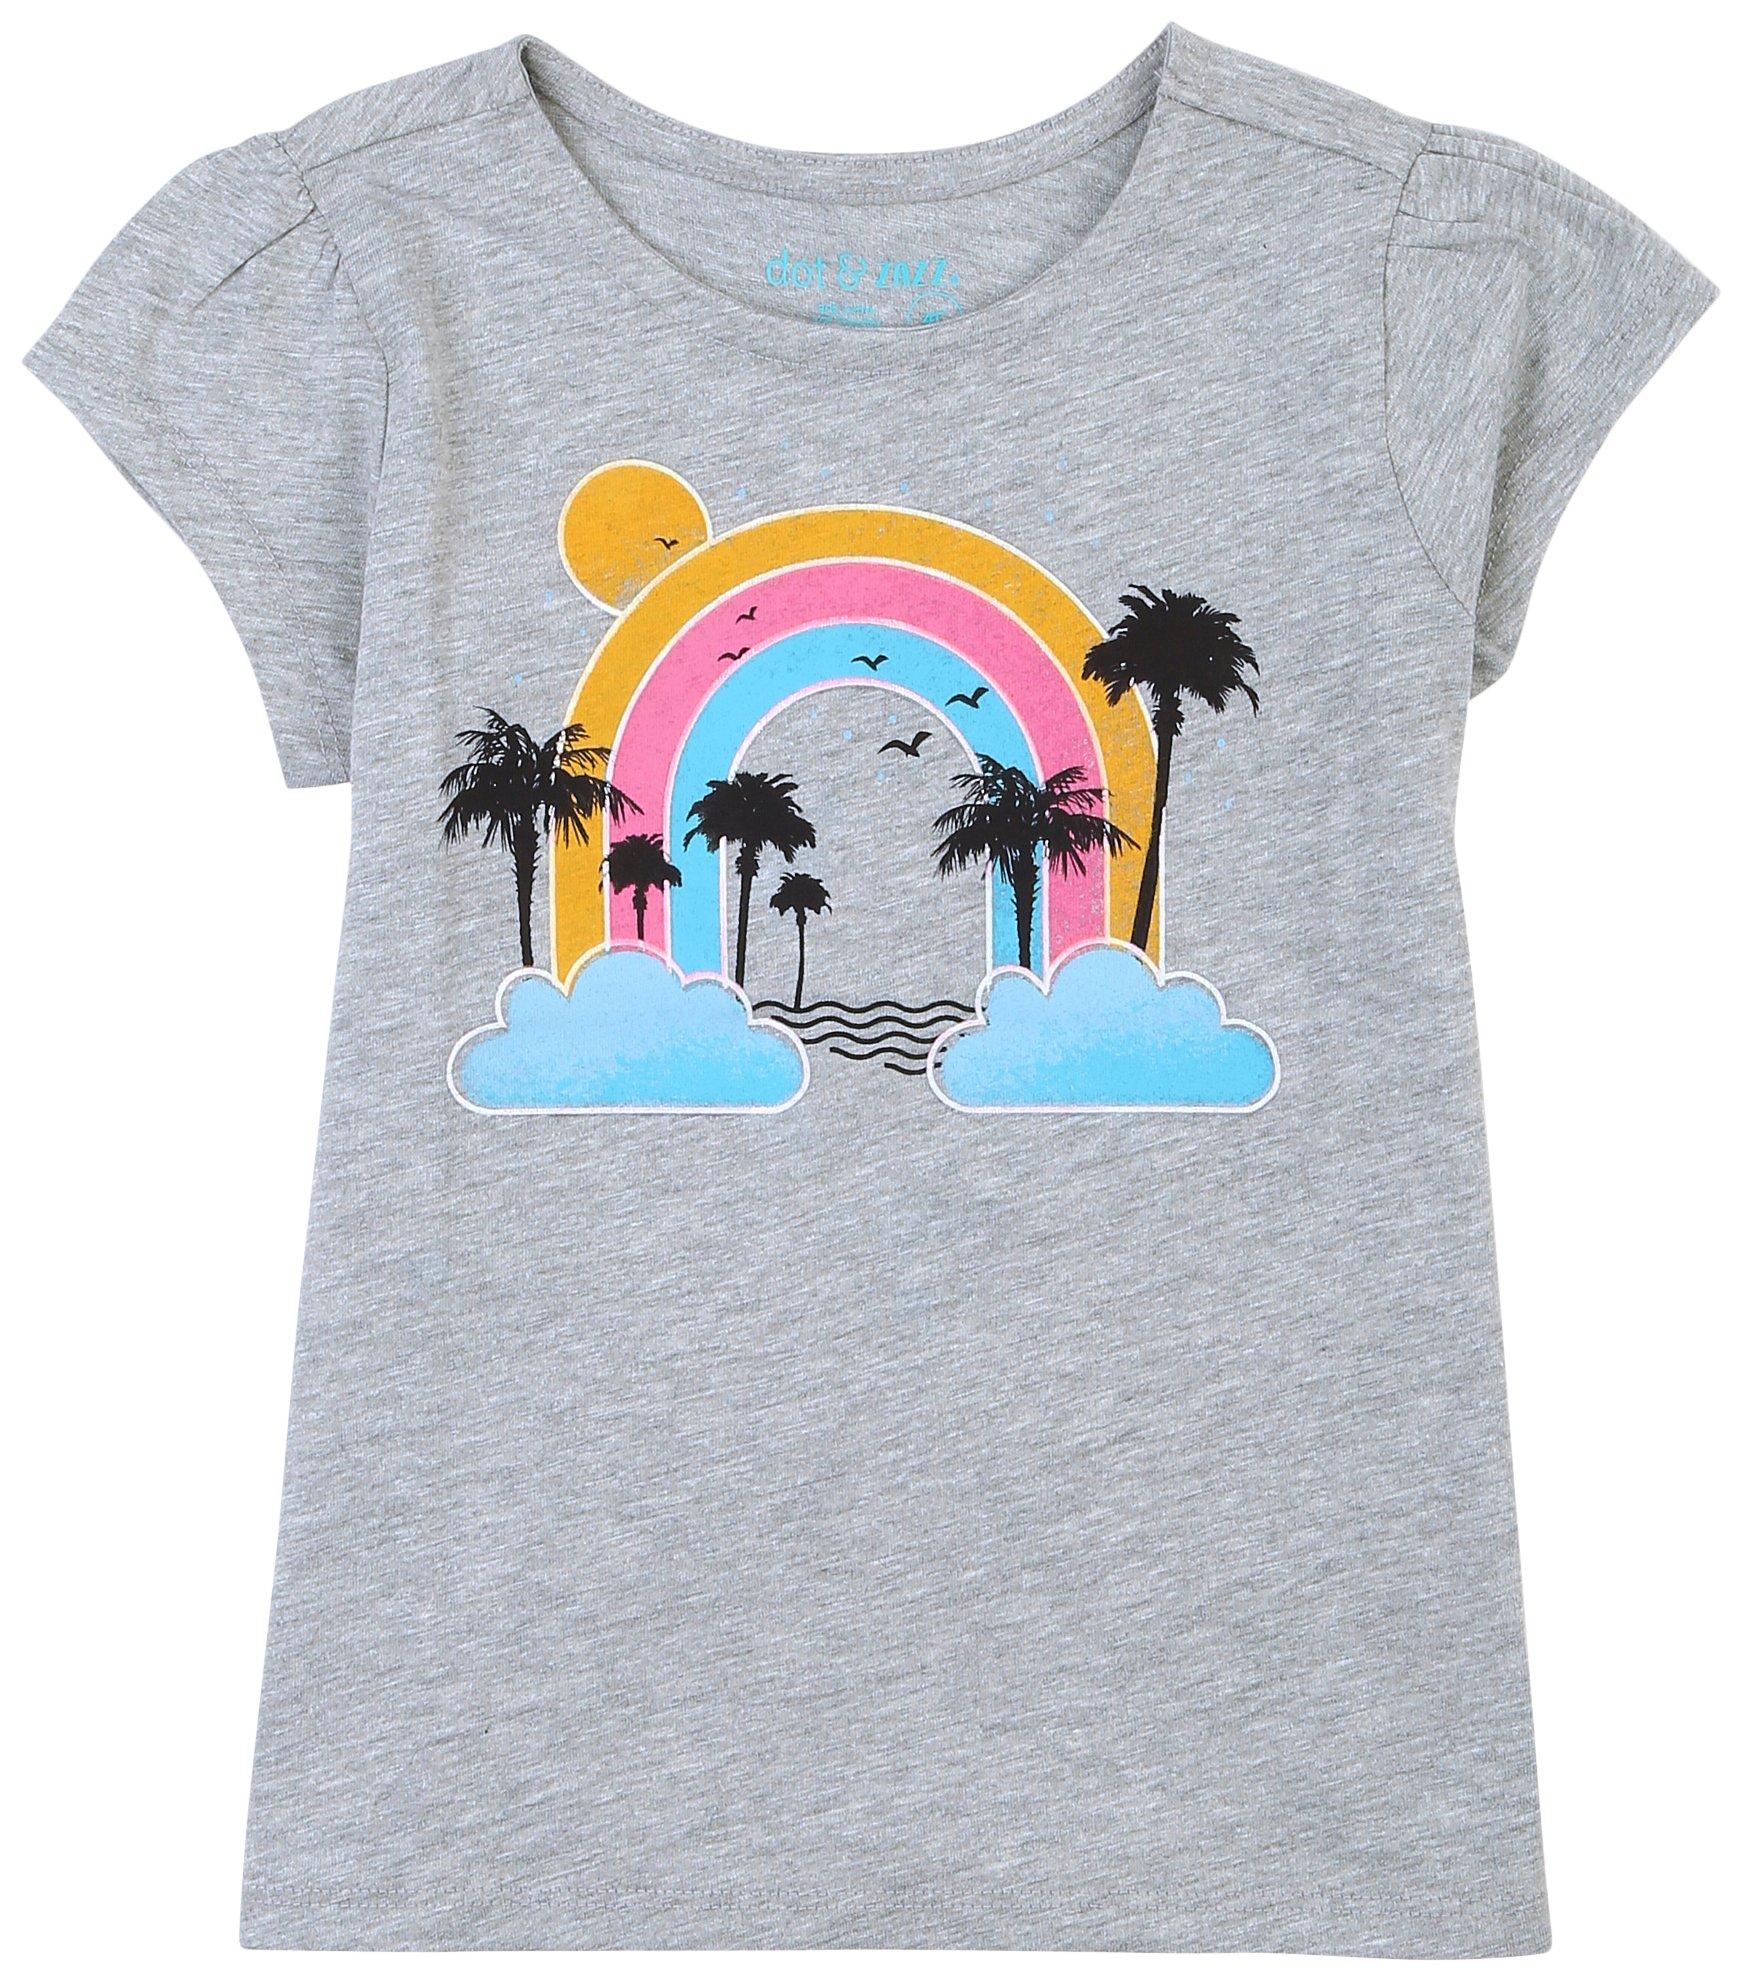 DOT & ZAZZ Toddler Girls Rainbow Shore Short Sleeve Tee